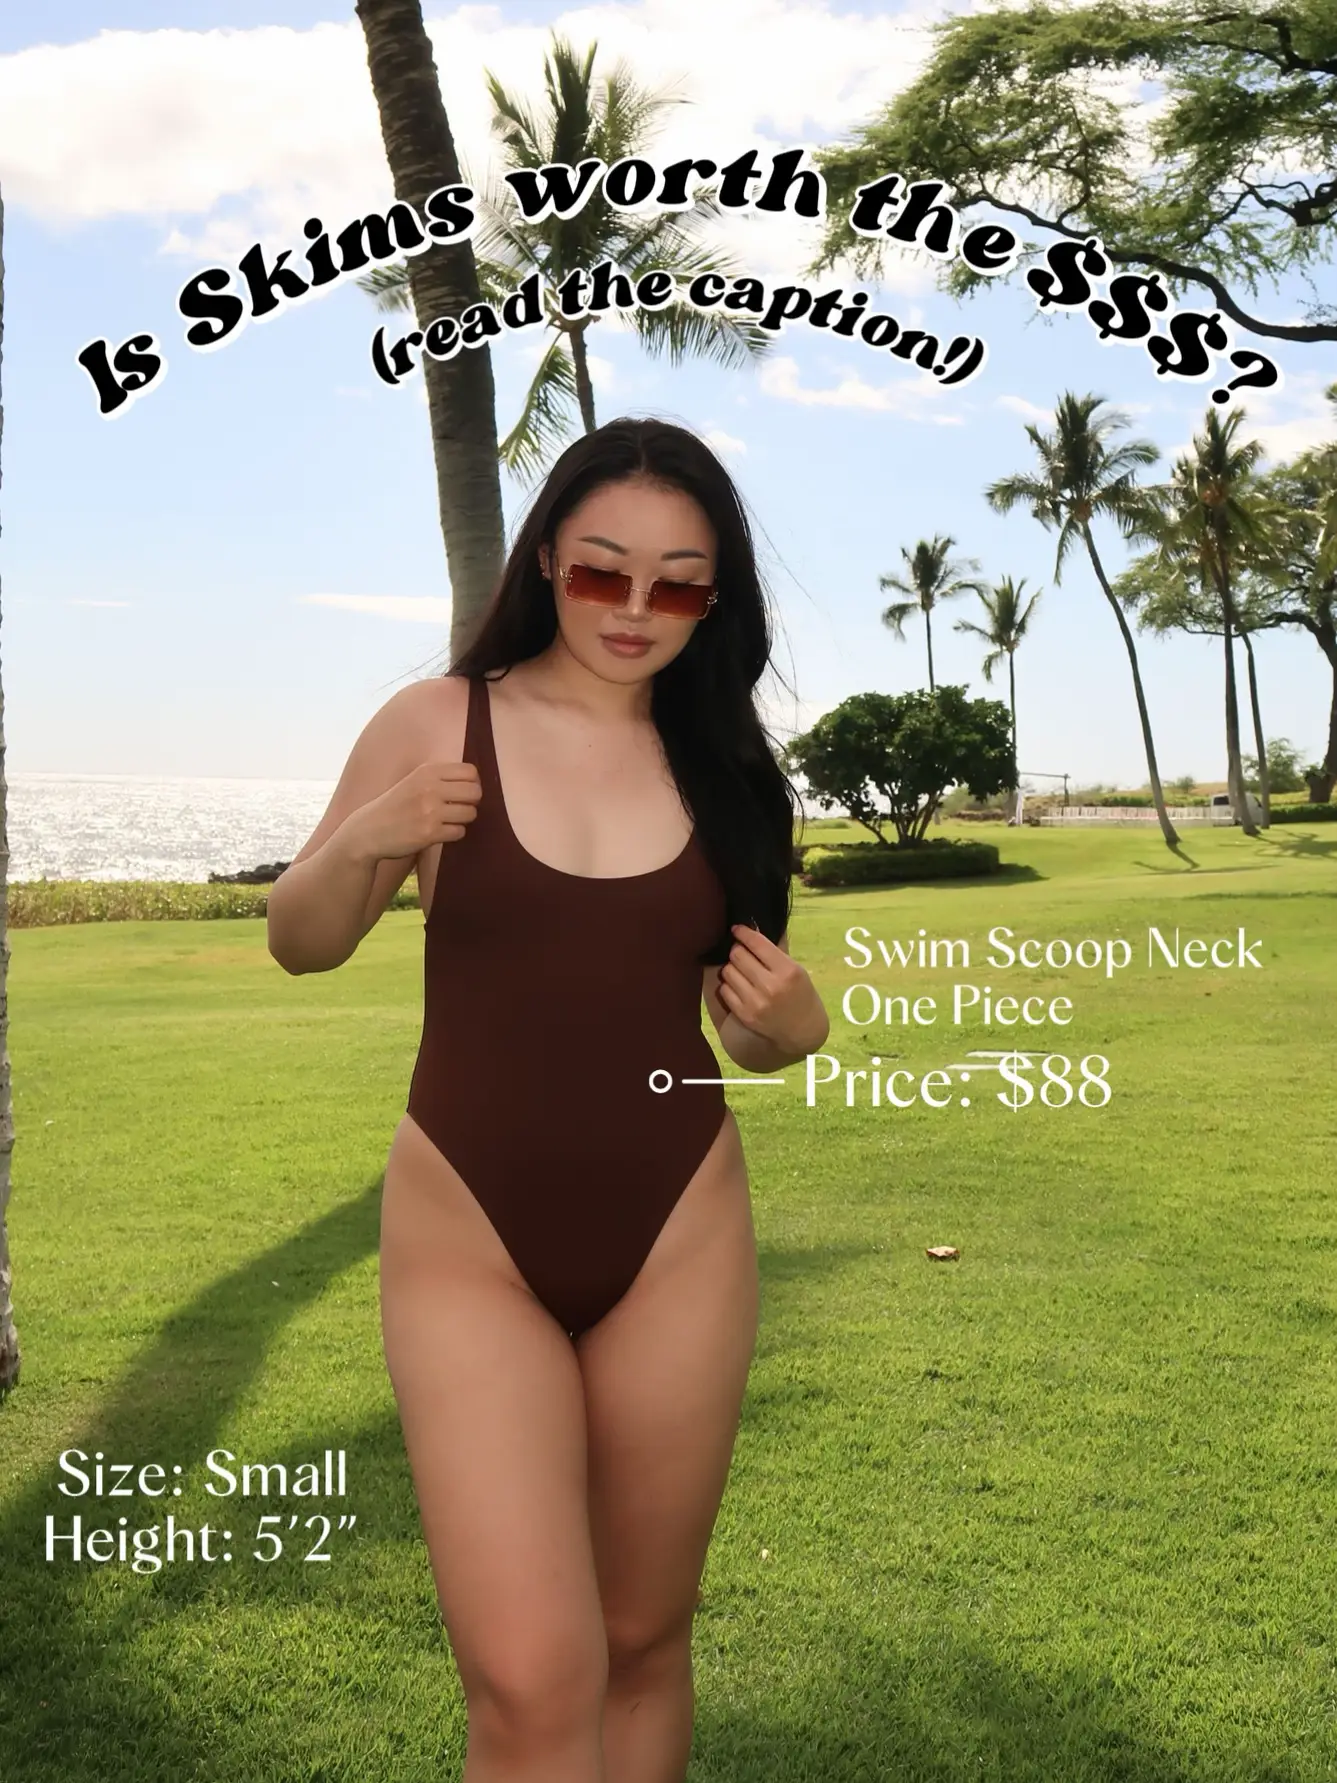 SKIMS Swim Scoop Neck One Piece Color Onyx Size XL $88 MSRP